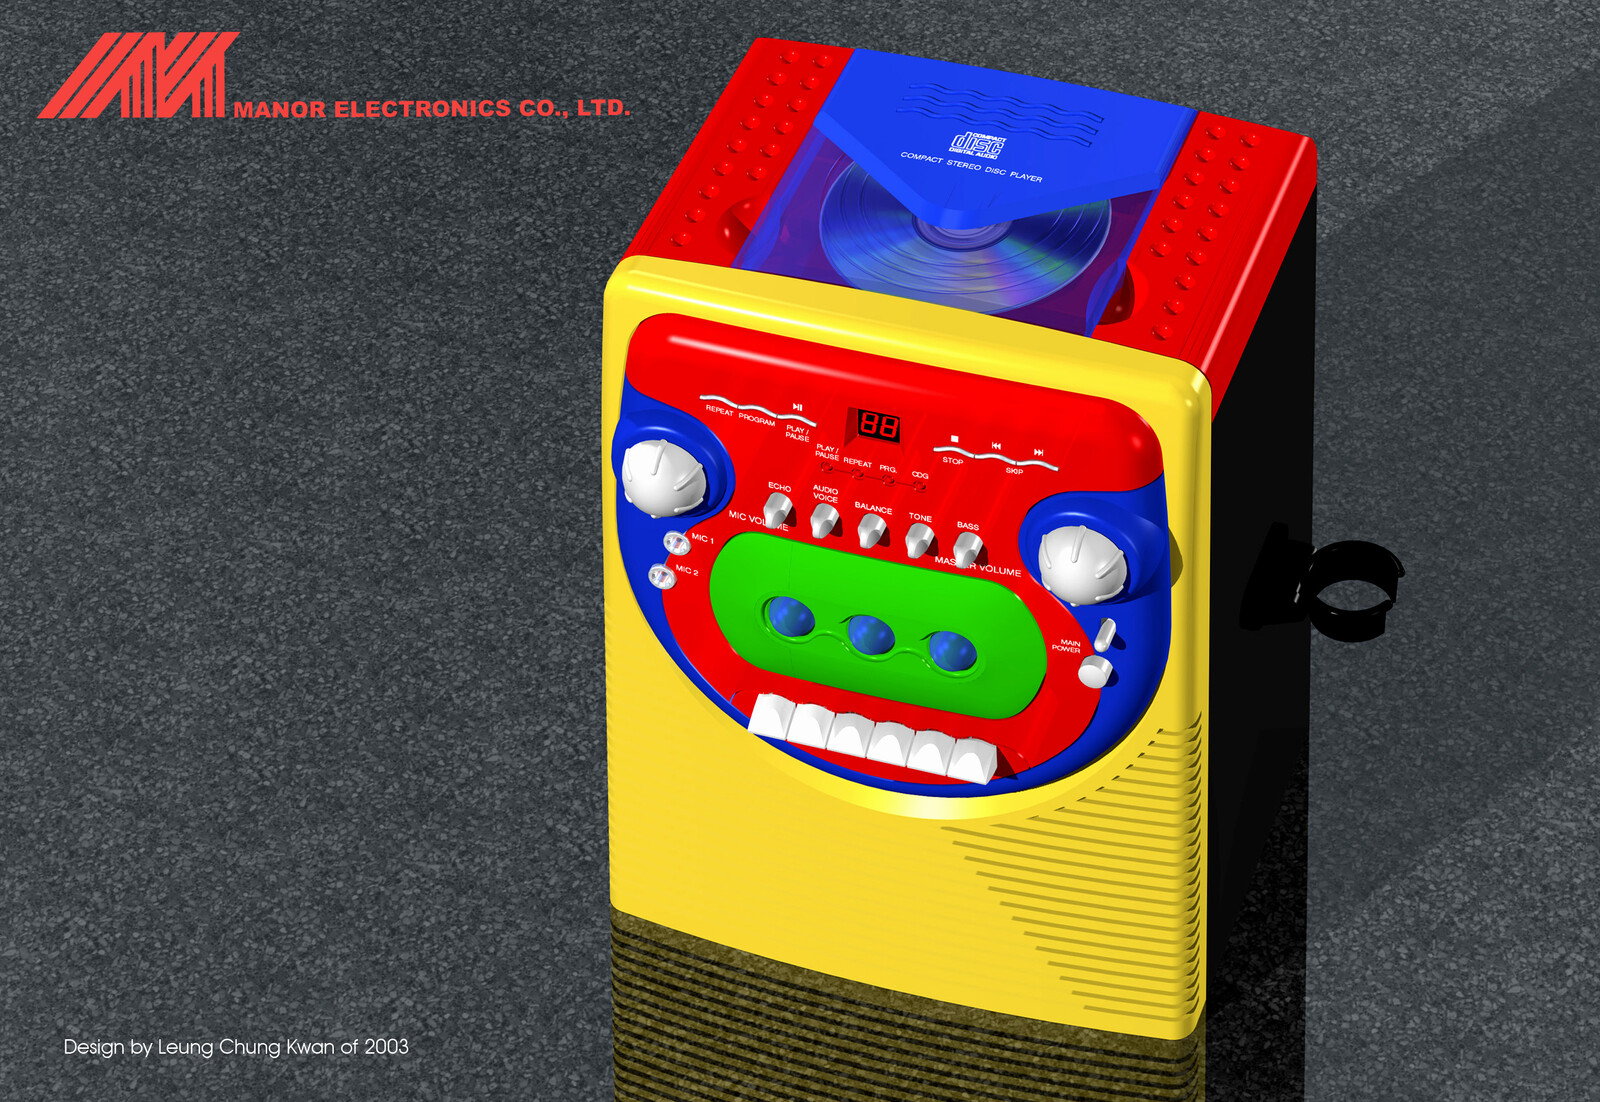 💎 Karaoke | Design by Leung Chung Kwan on 2003 💎
Client︰Manor Electronics Co., LTD.